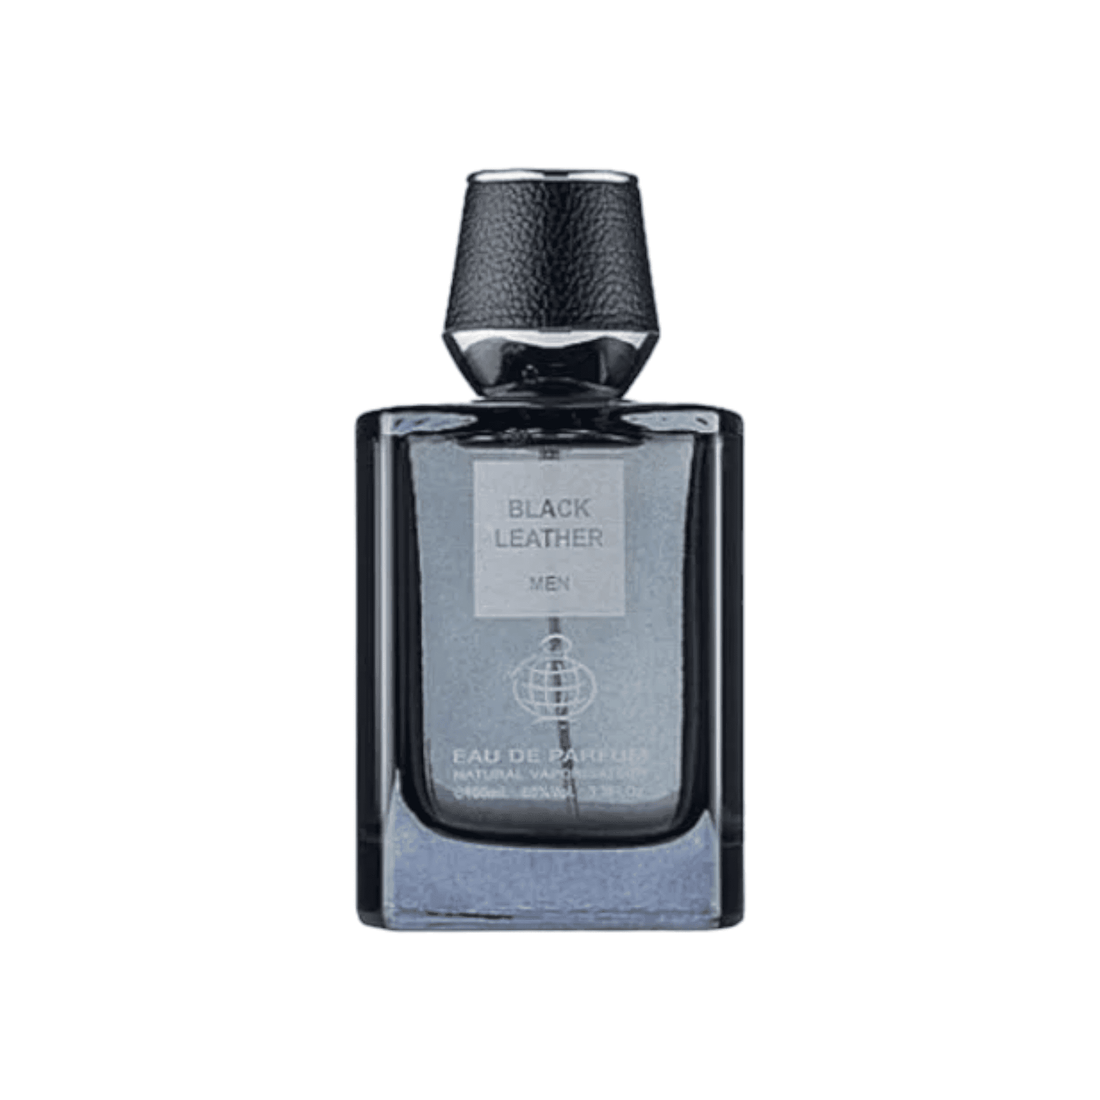 Elegant 100ml bottle of Black Leather by Fragrance World, showcasing its luxurious blend of blackcurrant, bergamot, and oakmoss.